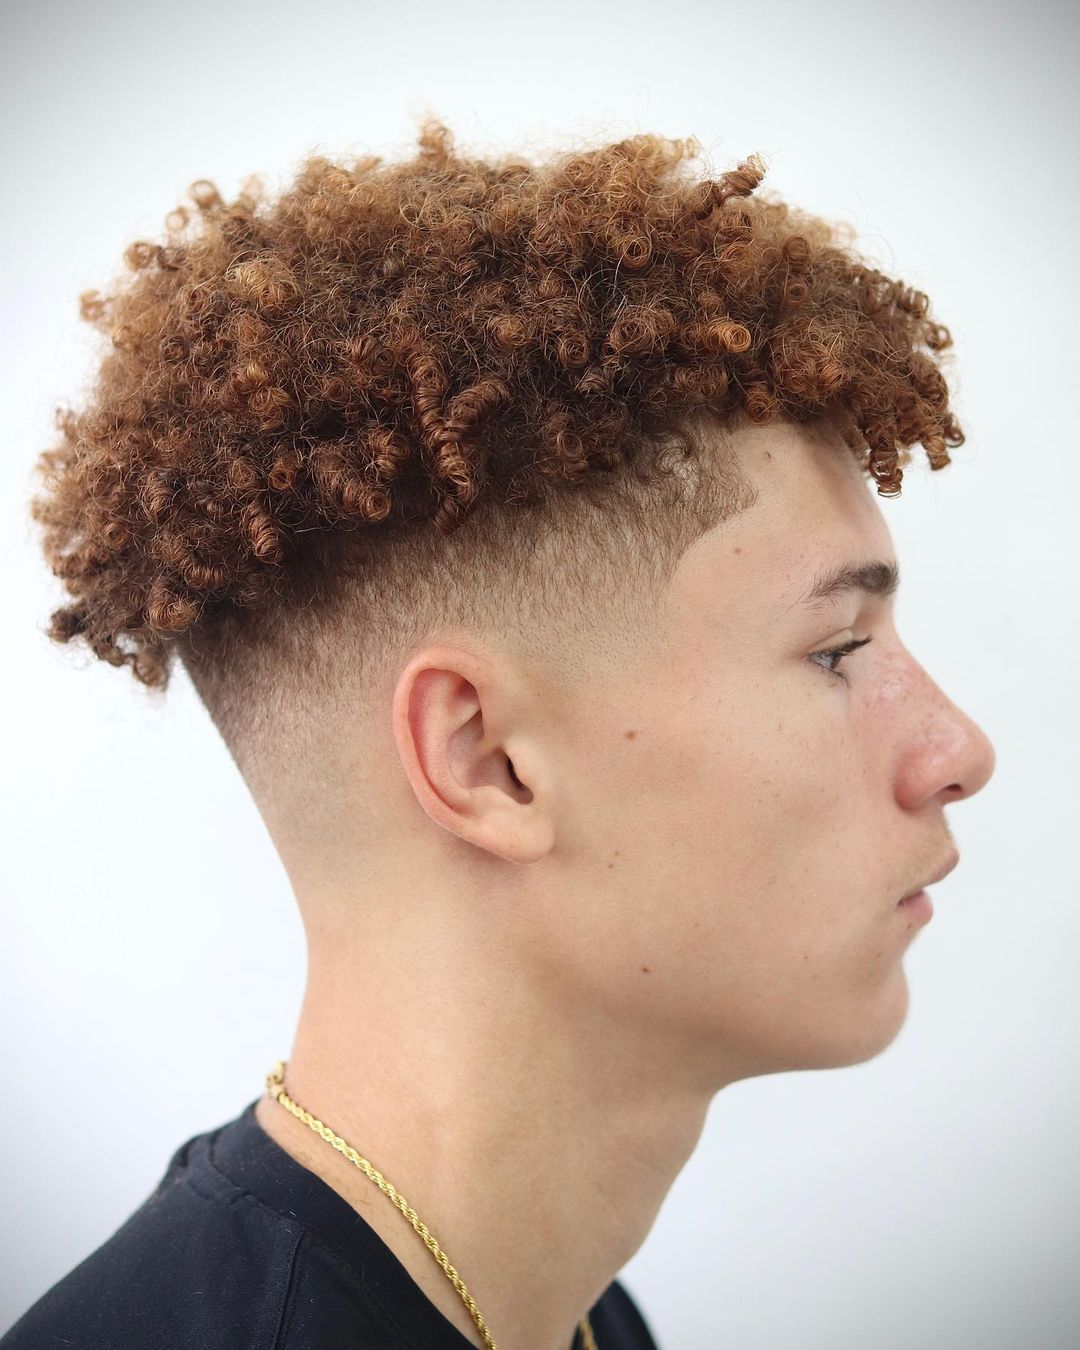 46,901 Boy Haircut Images, Stock Photos & Vectors | Shutterstock